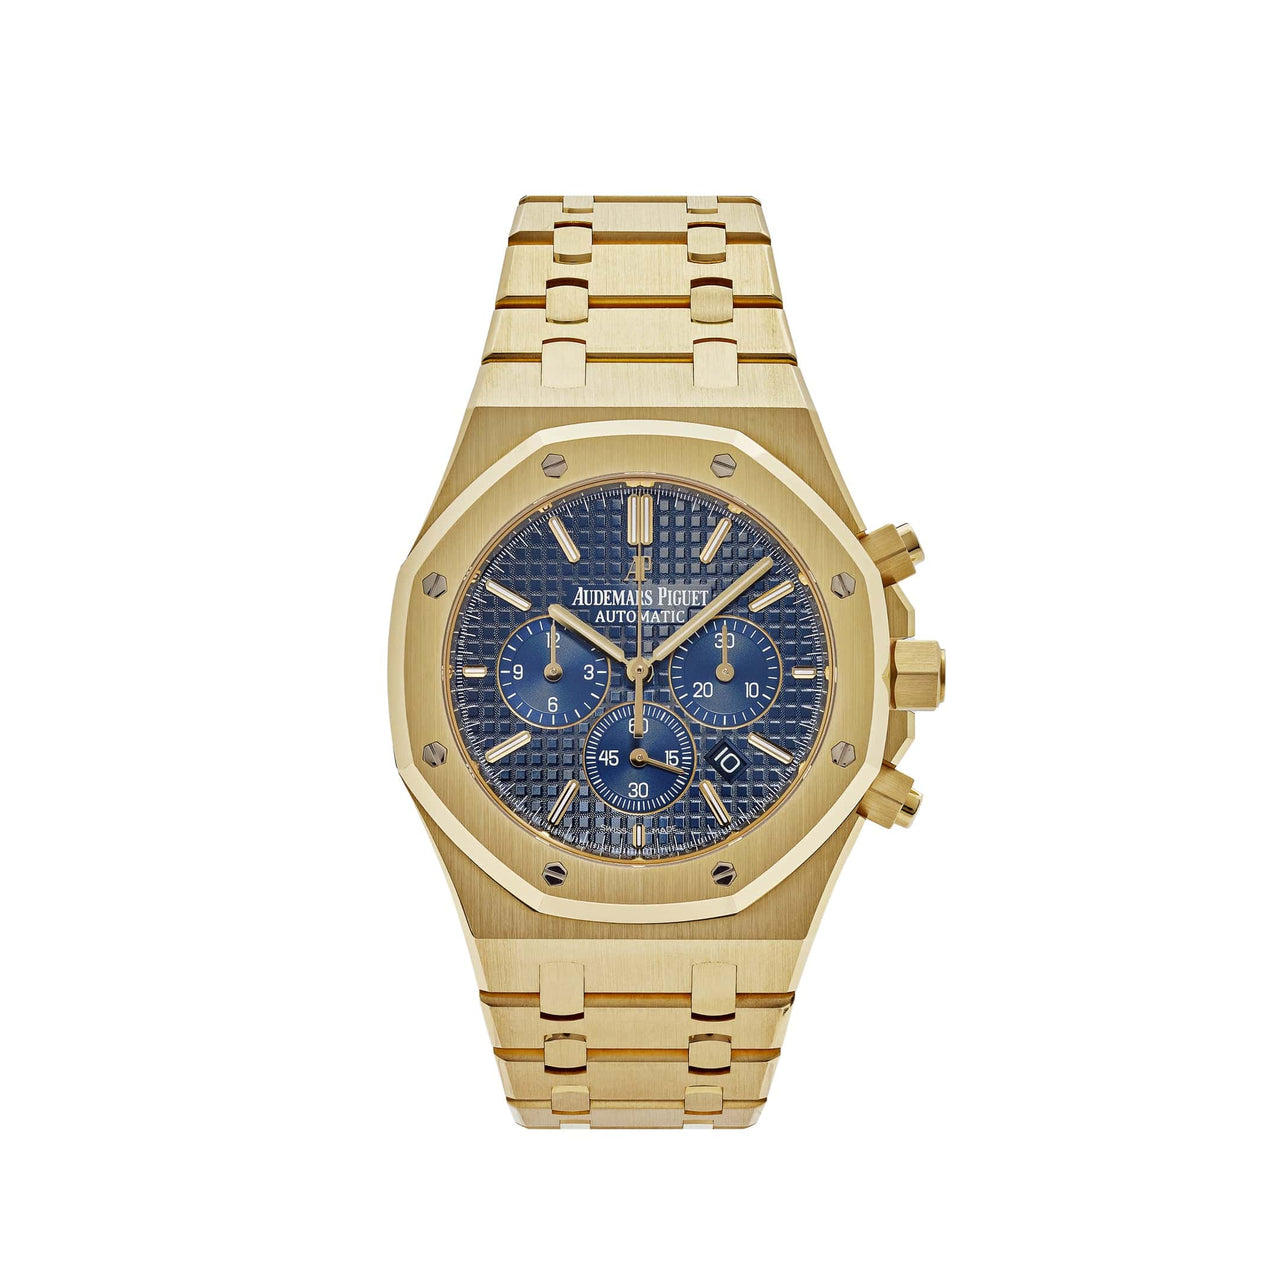 Luxury Watch Audemars Piguet Royal Oak Chronograph 26320BA.OO.1220BA.02 Wrist Aficionado